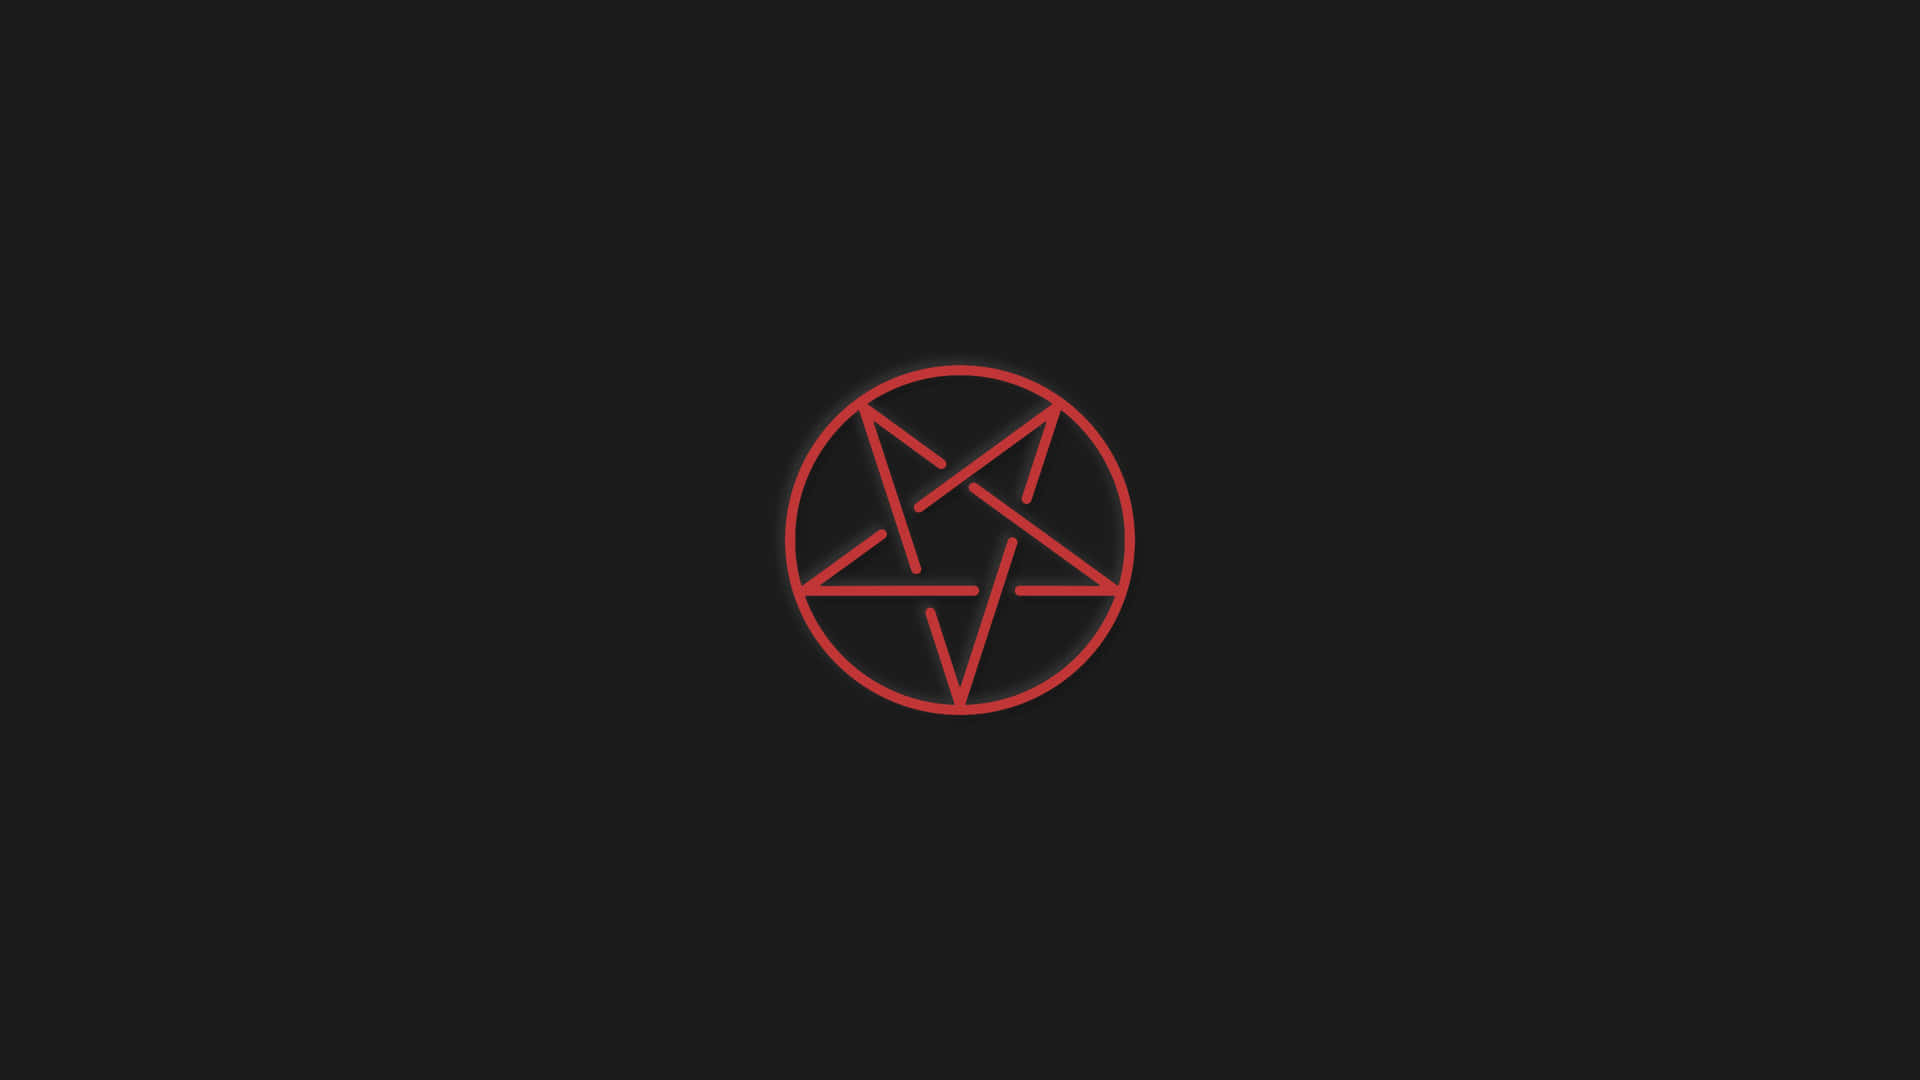 Red Pentagramon Black Background